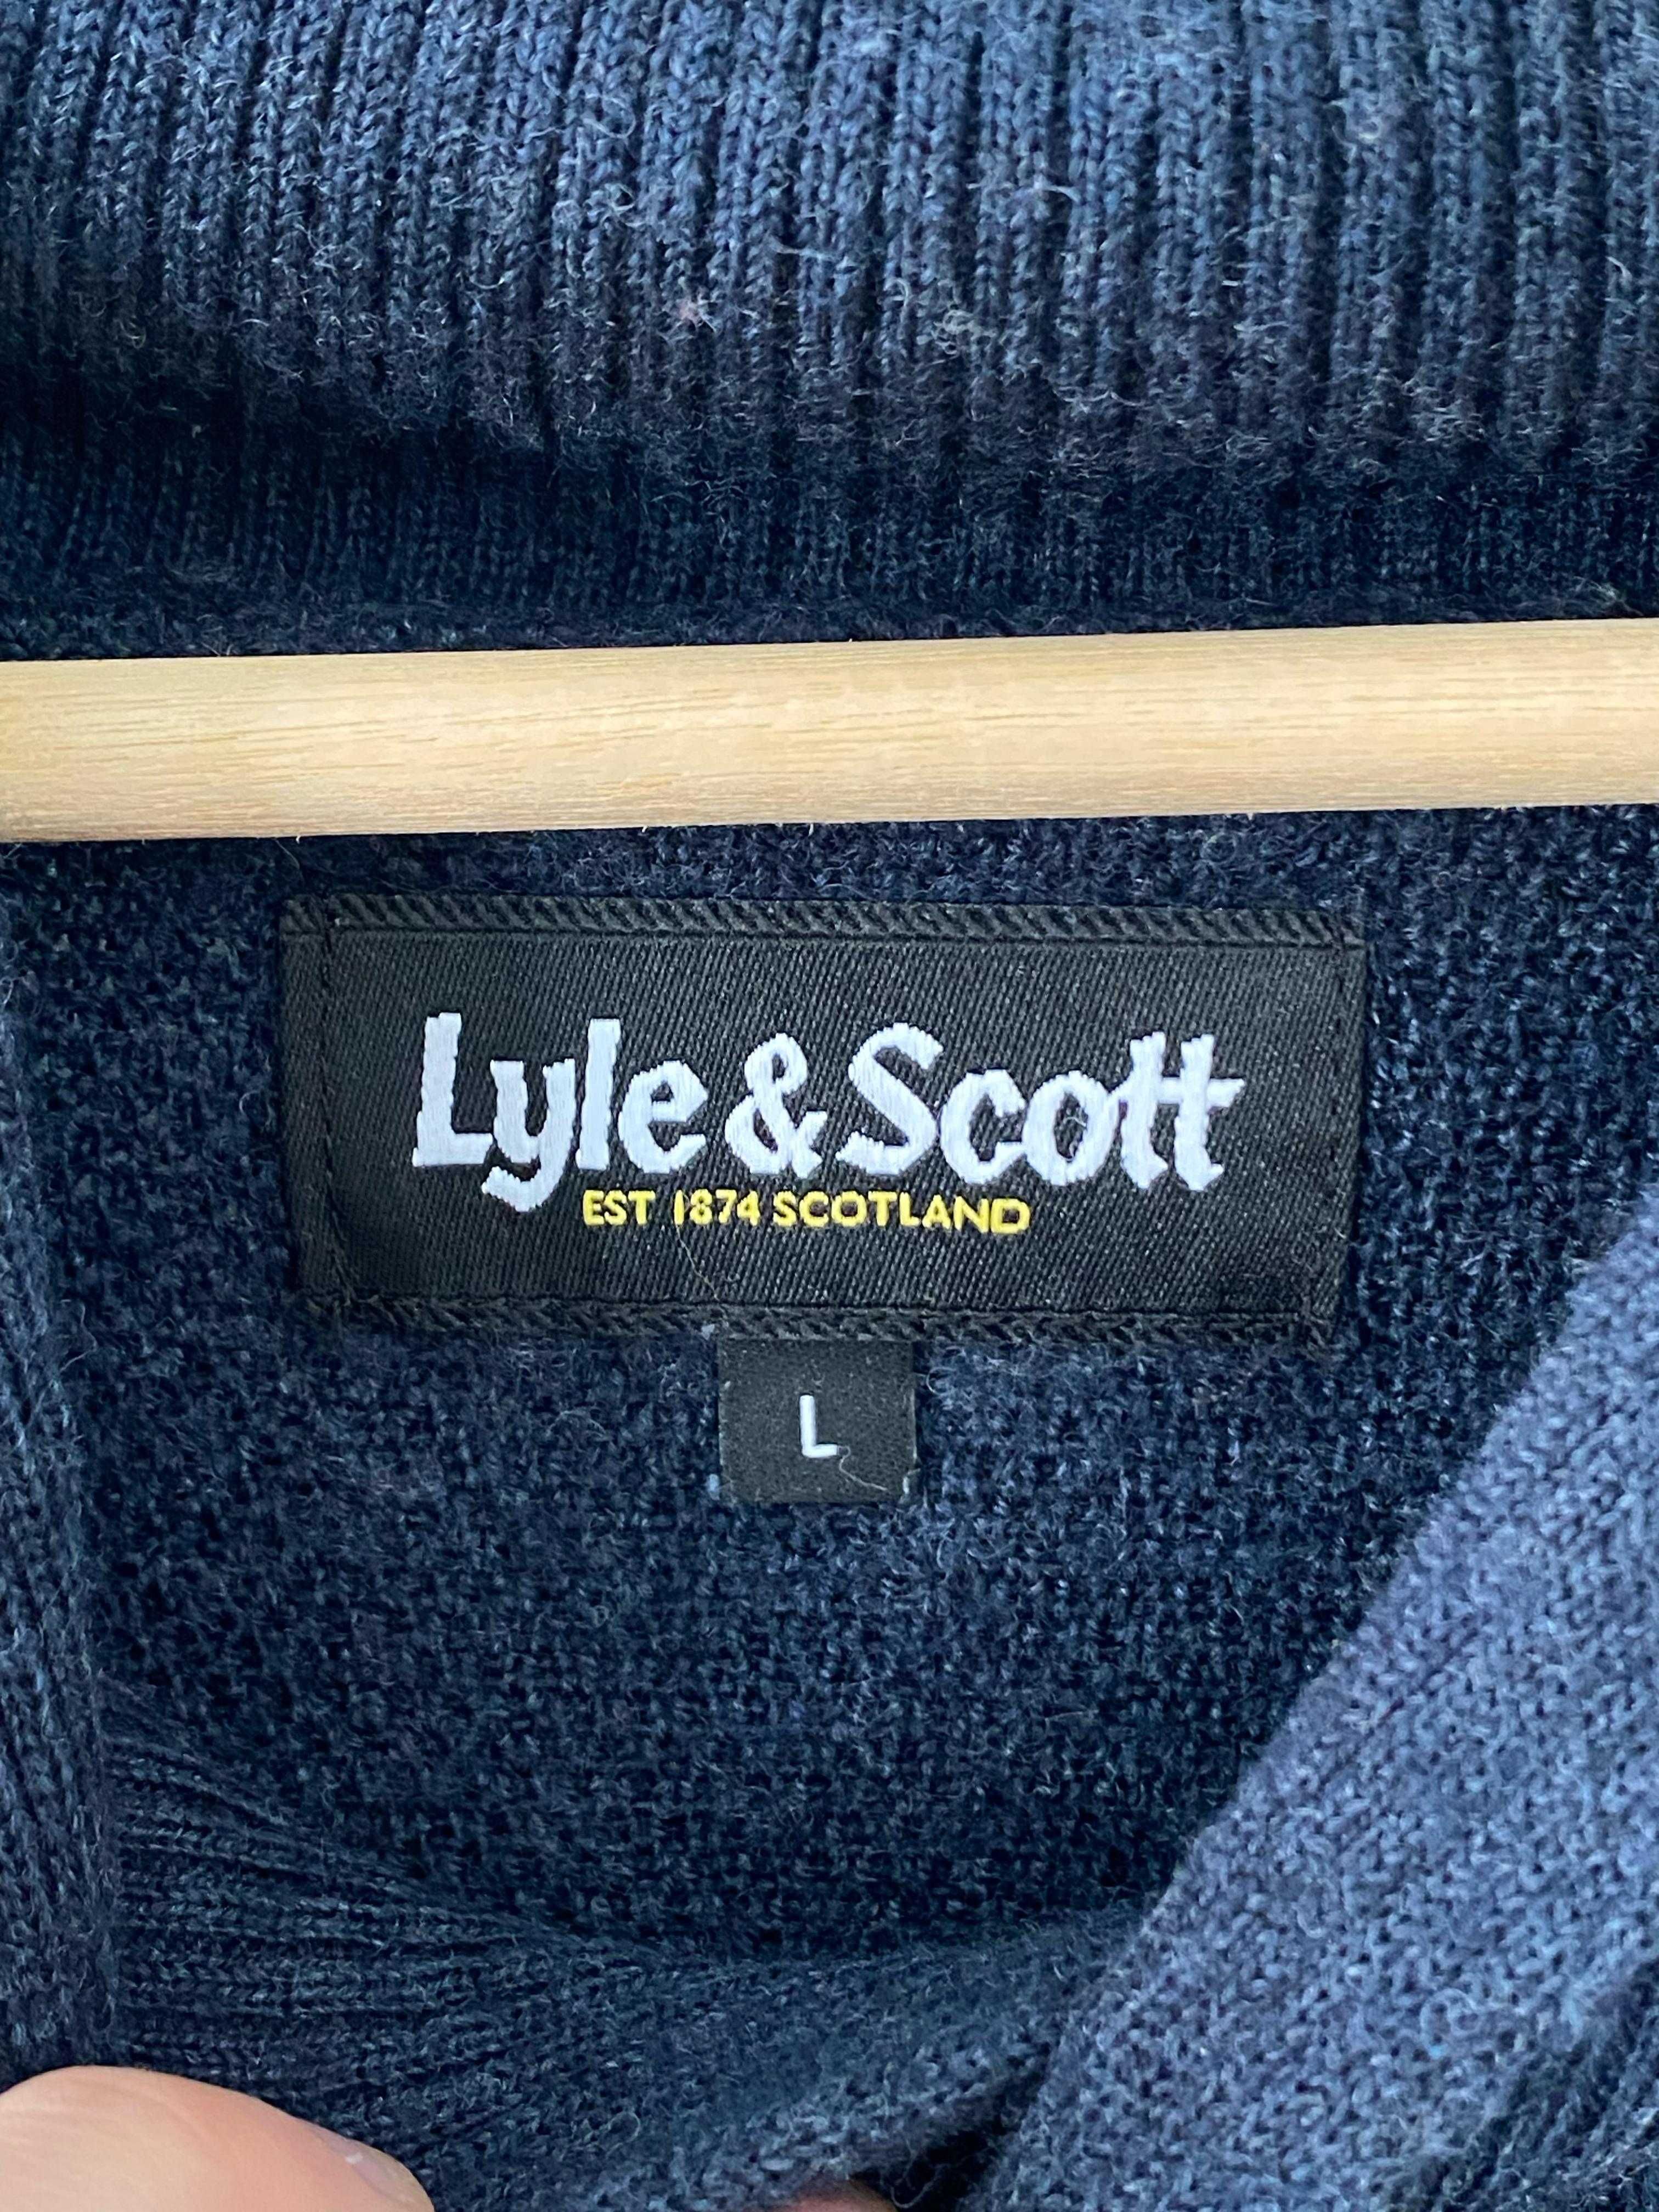 Sweater Lyle & Scott Azul Marinho - Tamanho L